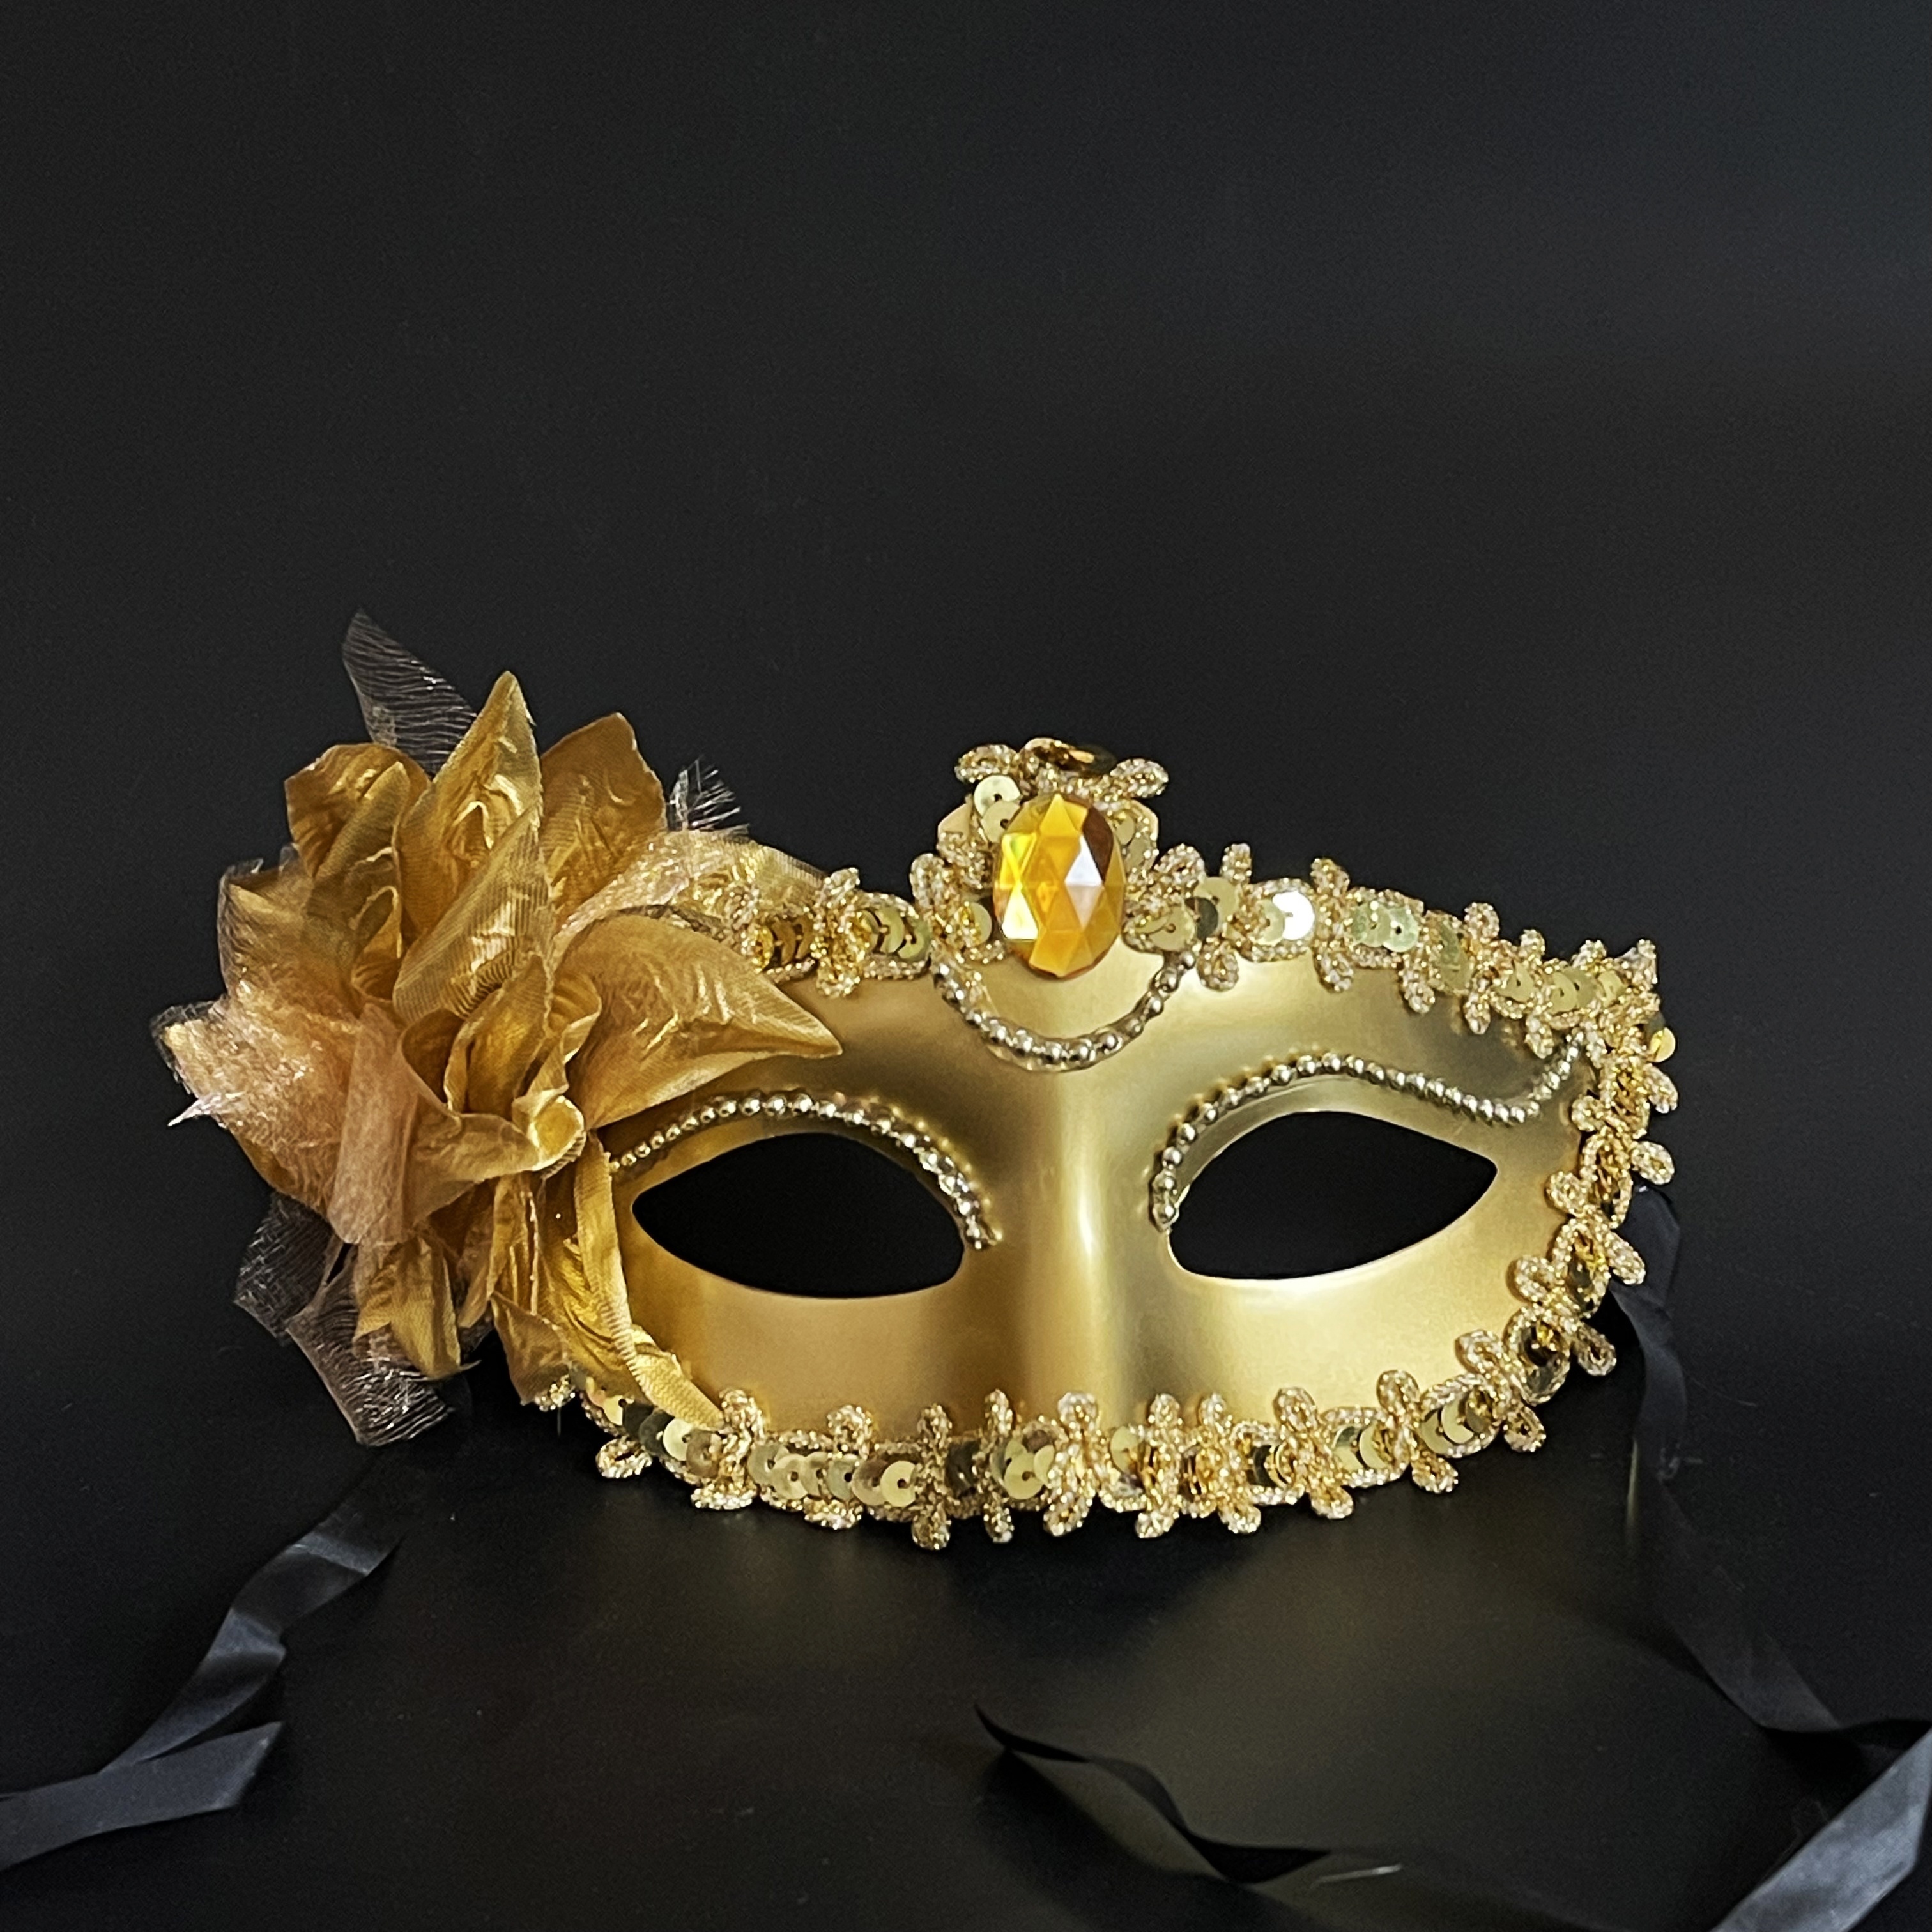 Stunning Rhinestone Butterfly Mask for Face Women Gifrls Luxury